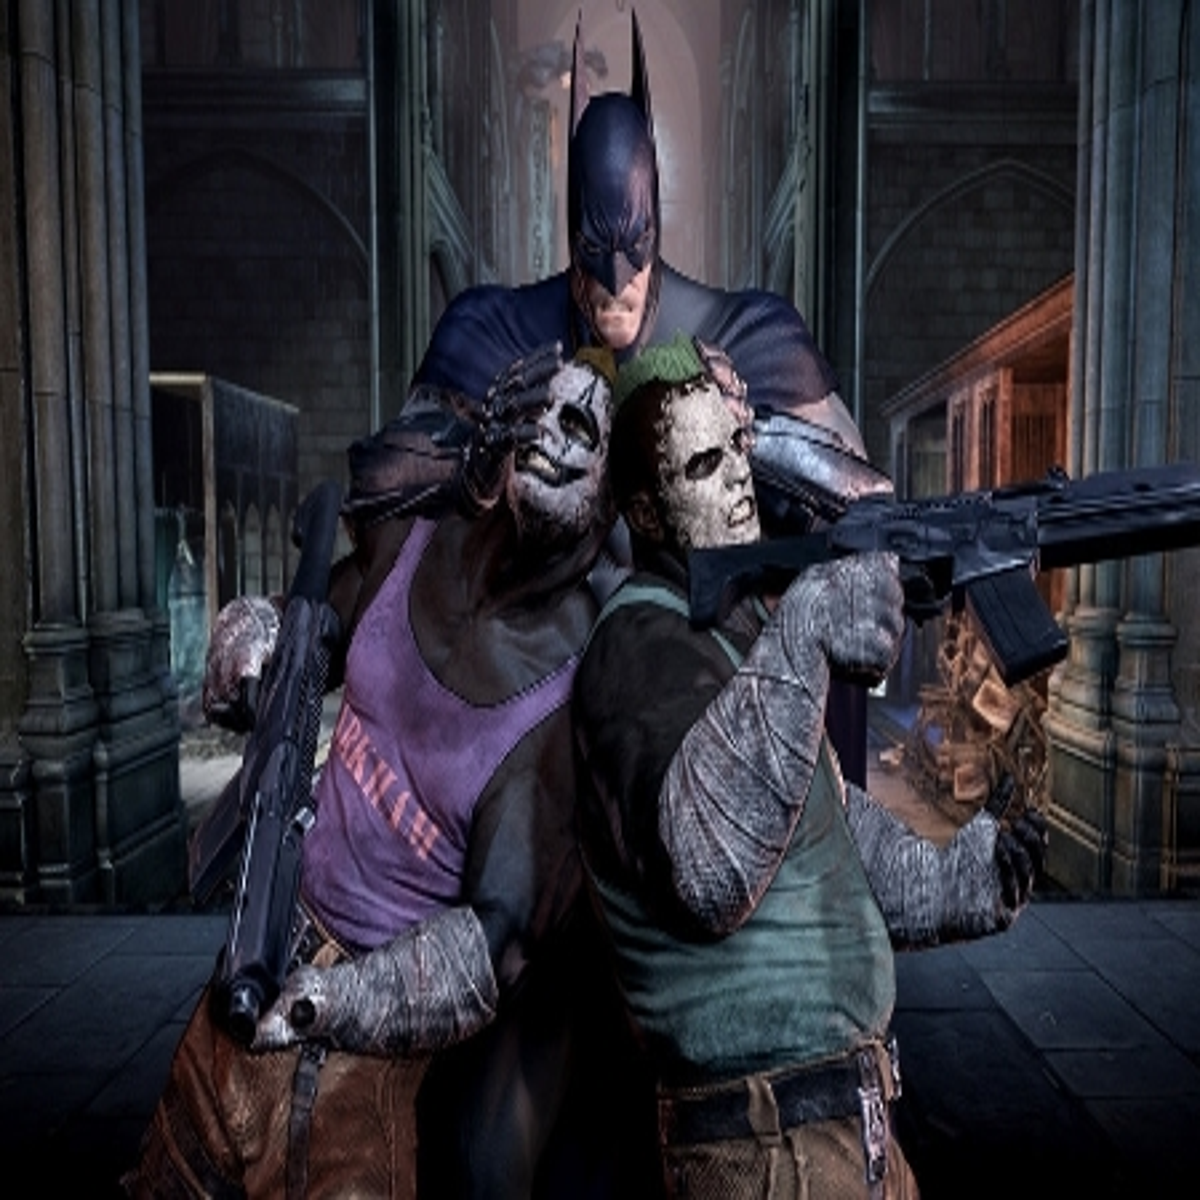 Batman: Arkham City Gameplay (PC, PS3, Xbox 360, Wii) 